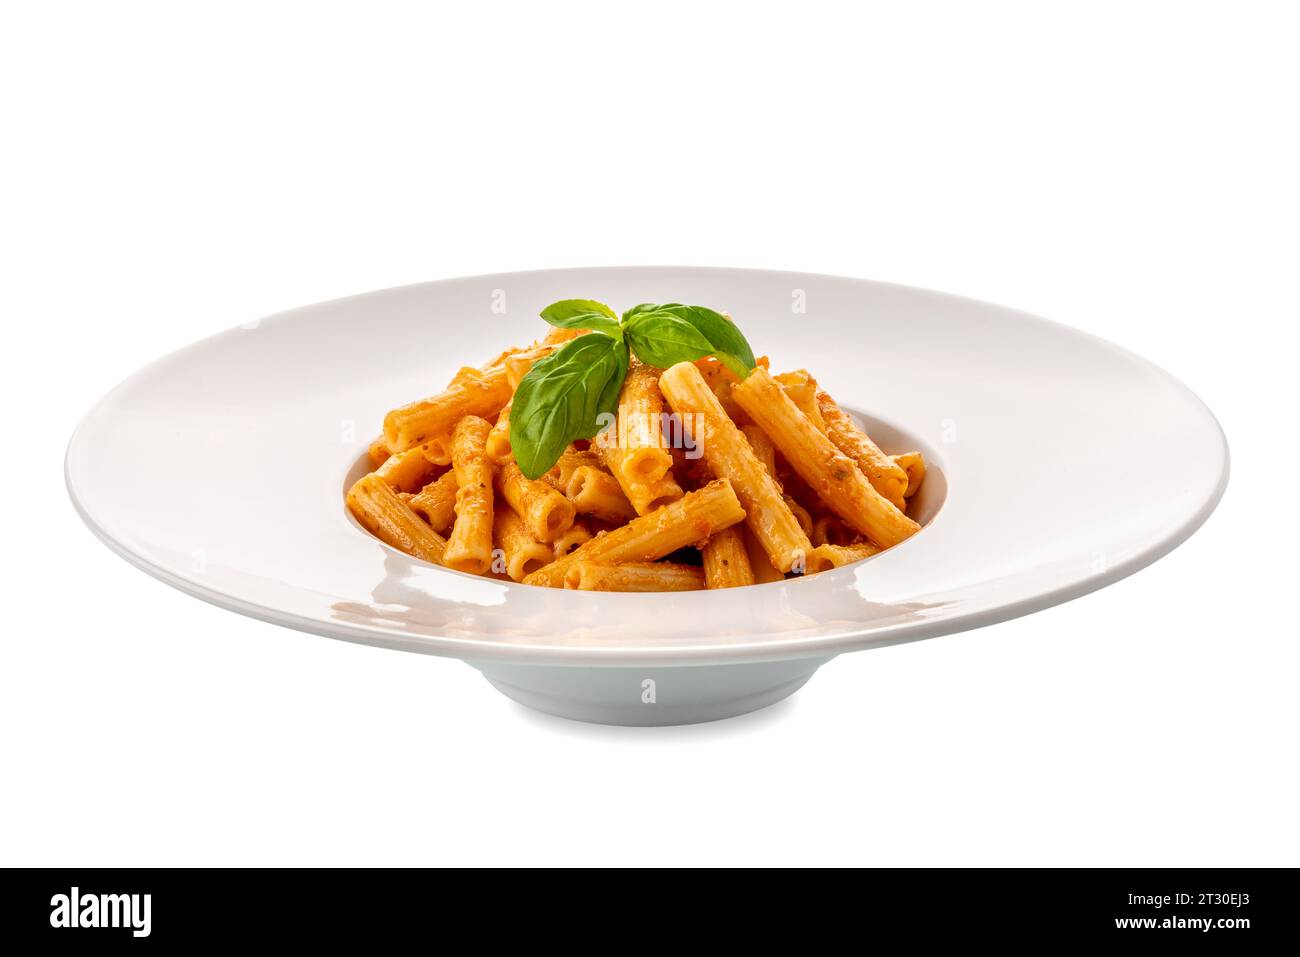 Macaroni rigati pasta with tomato sauce. Italian pasta called sedani rigati (striped celery) with tomato pesto and basil leaves in white dish isolated Stock Photo